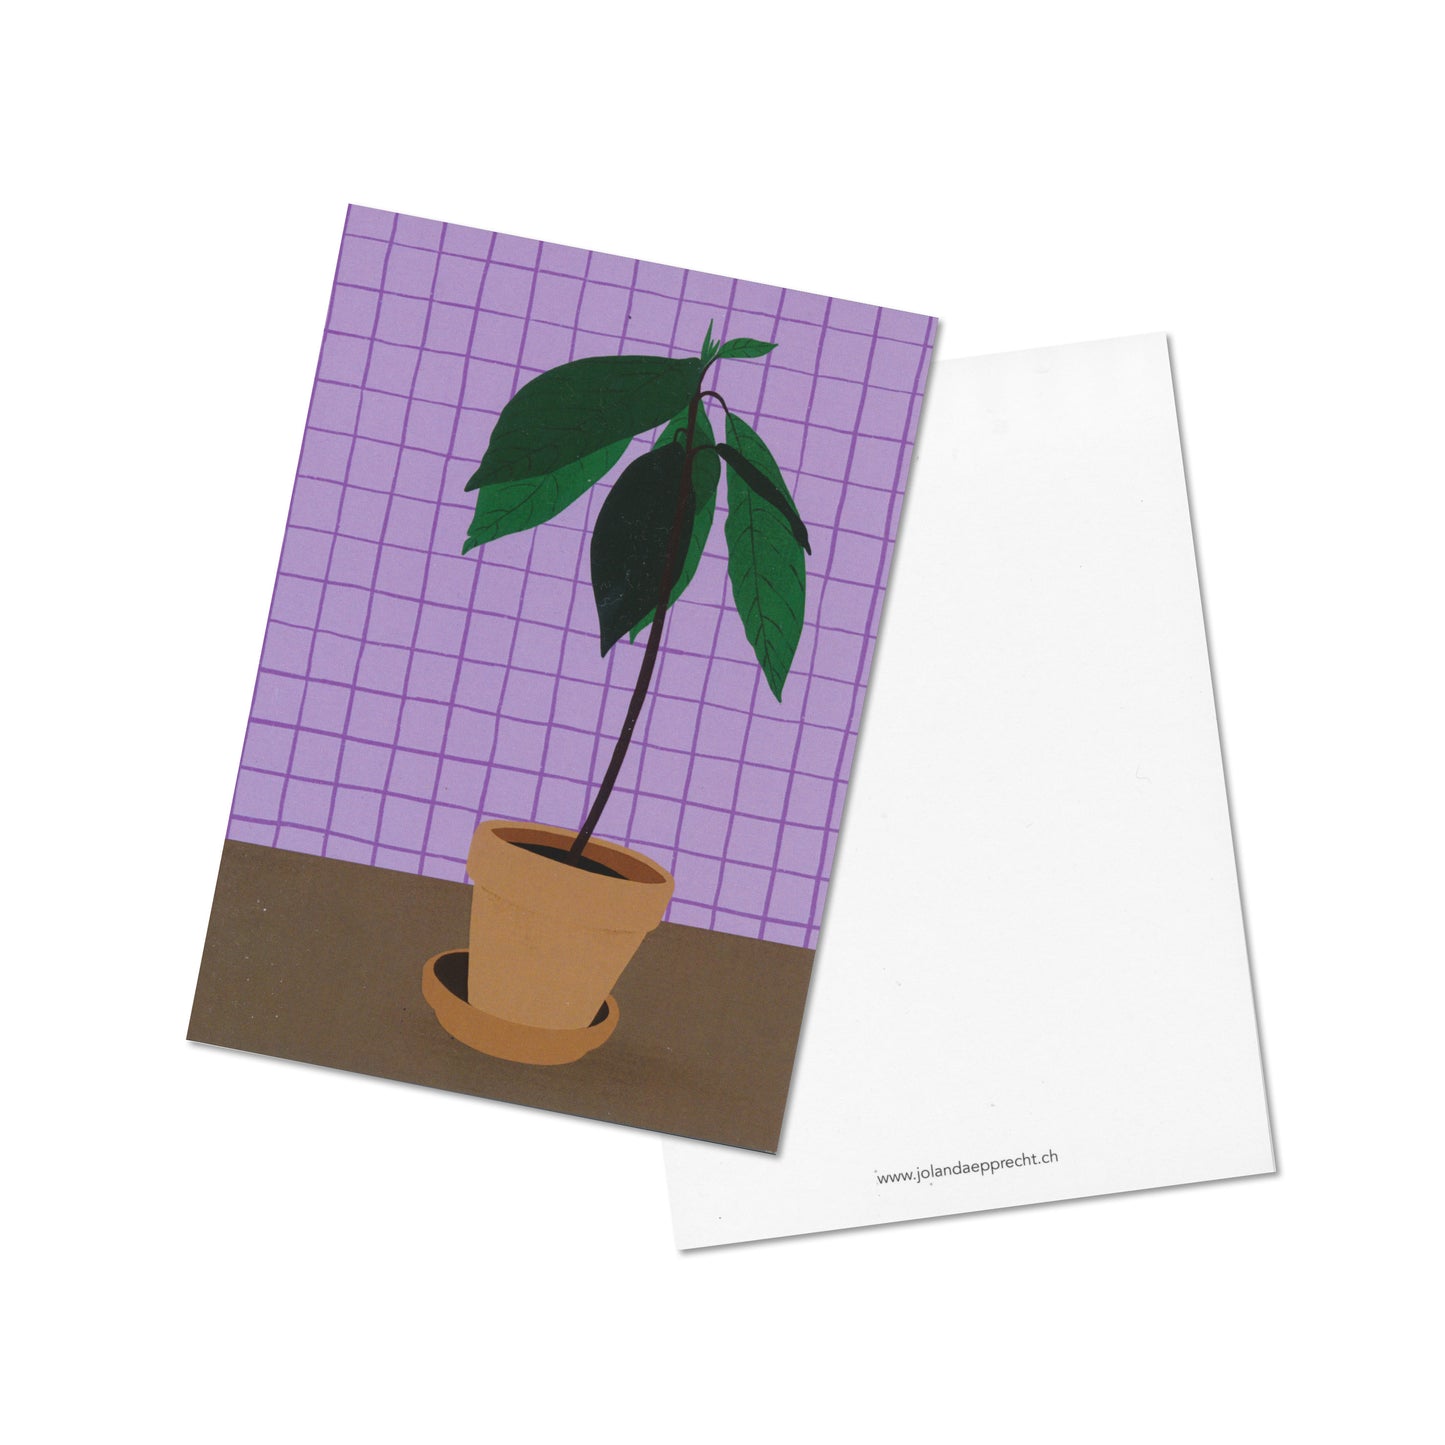 Jolanda Epprecht - Postkarte "Avocado" (5 Stück)